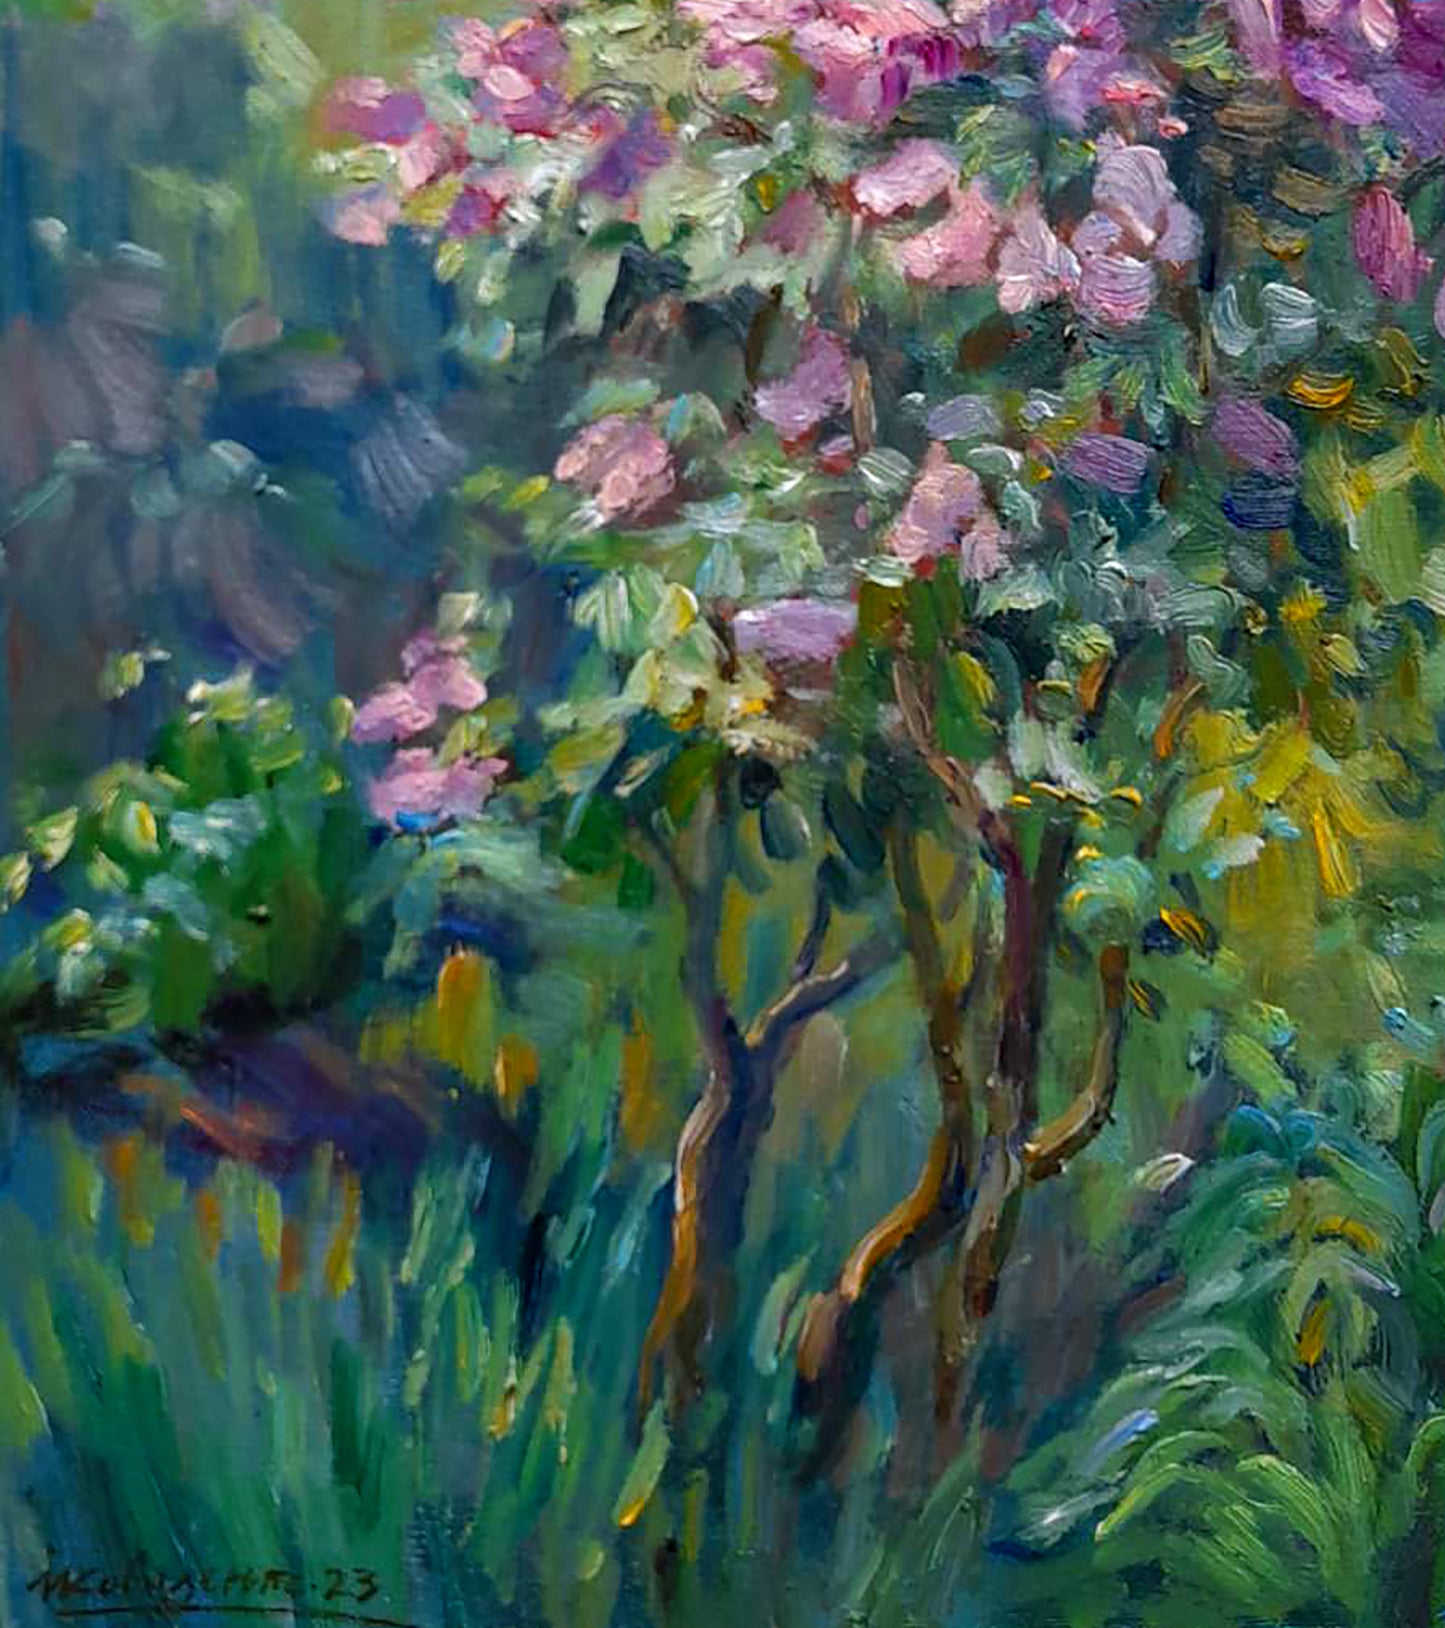 Oil painting Lilac blossoms in the garden Kovalenko Ivan Mikhailovich